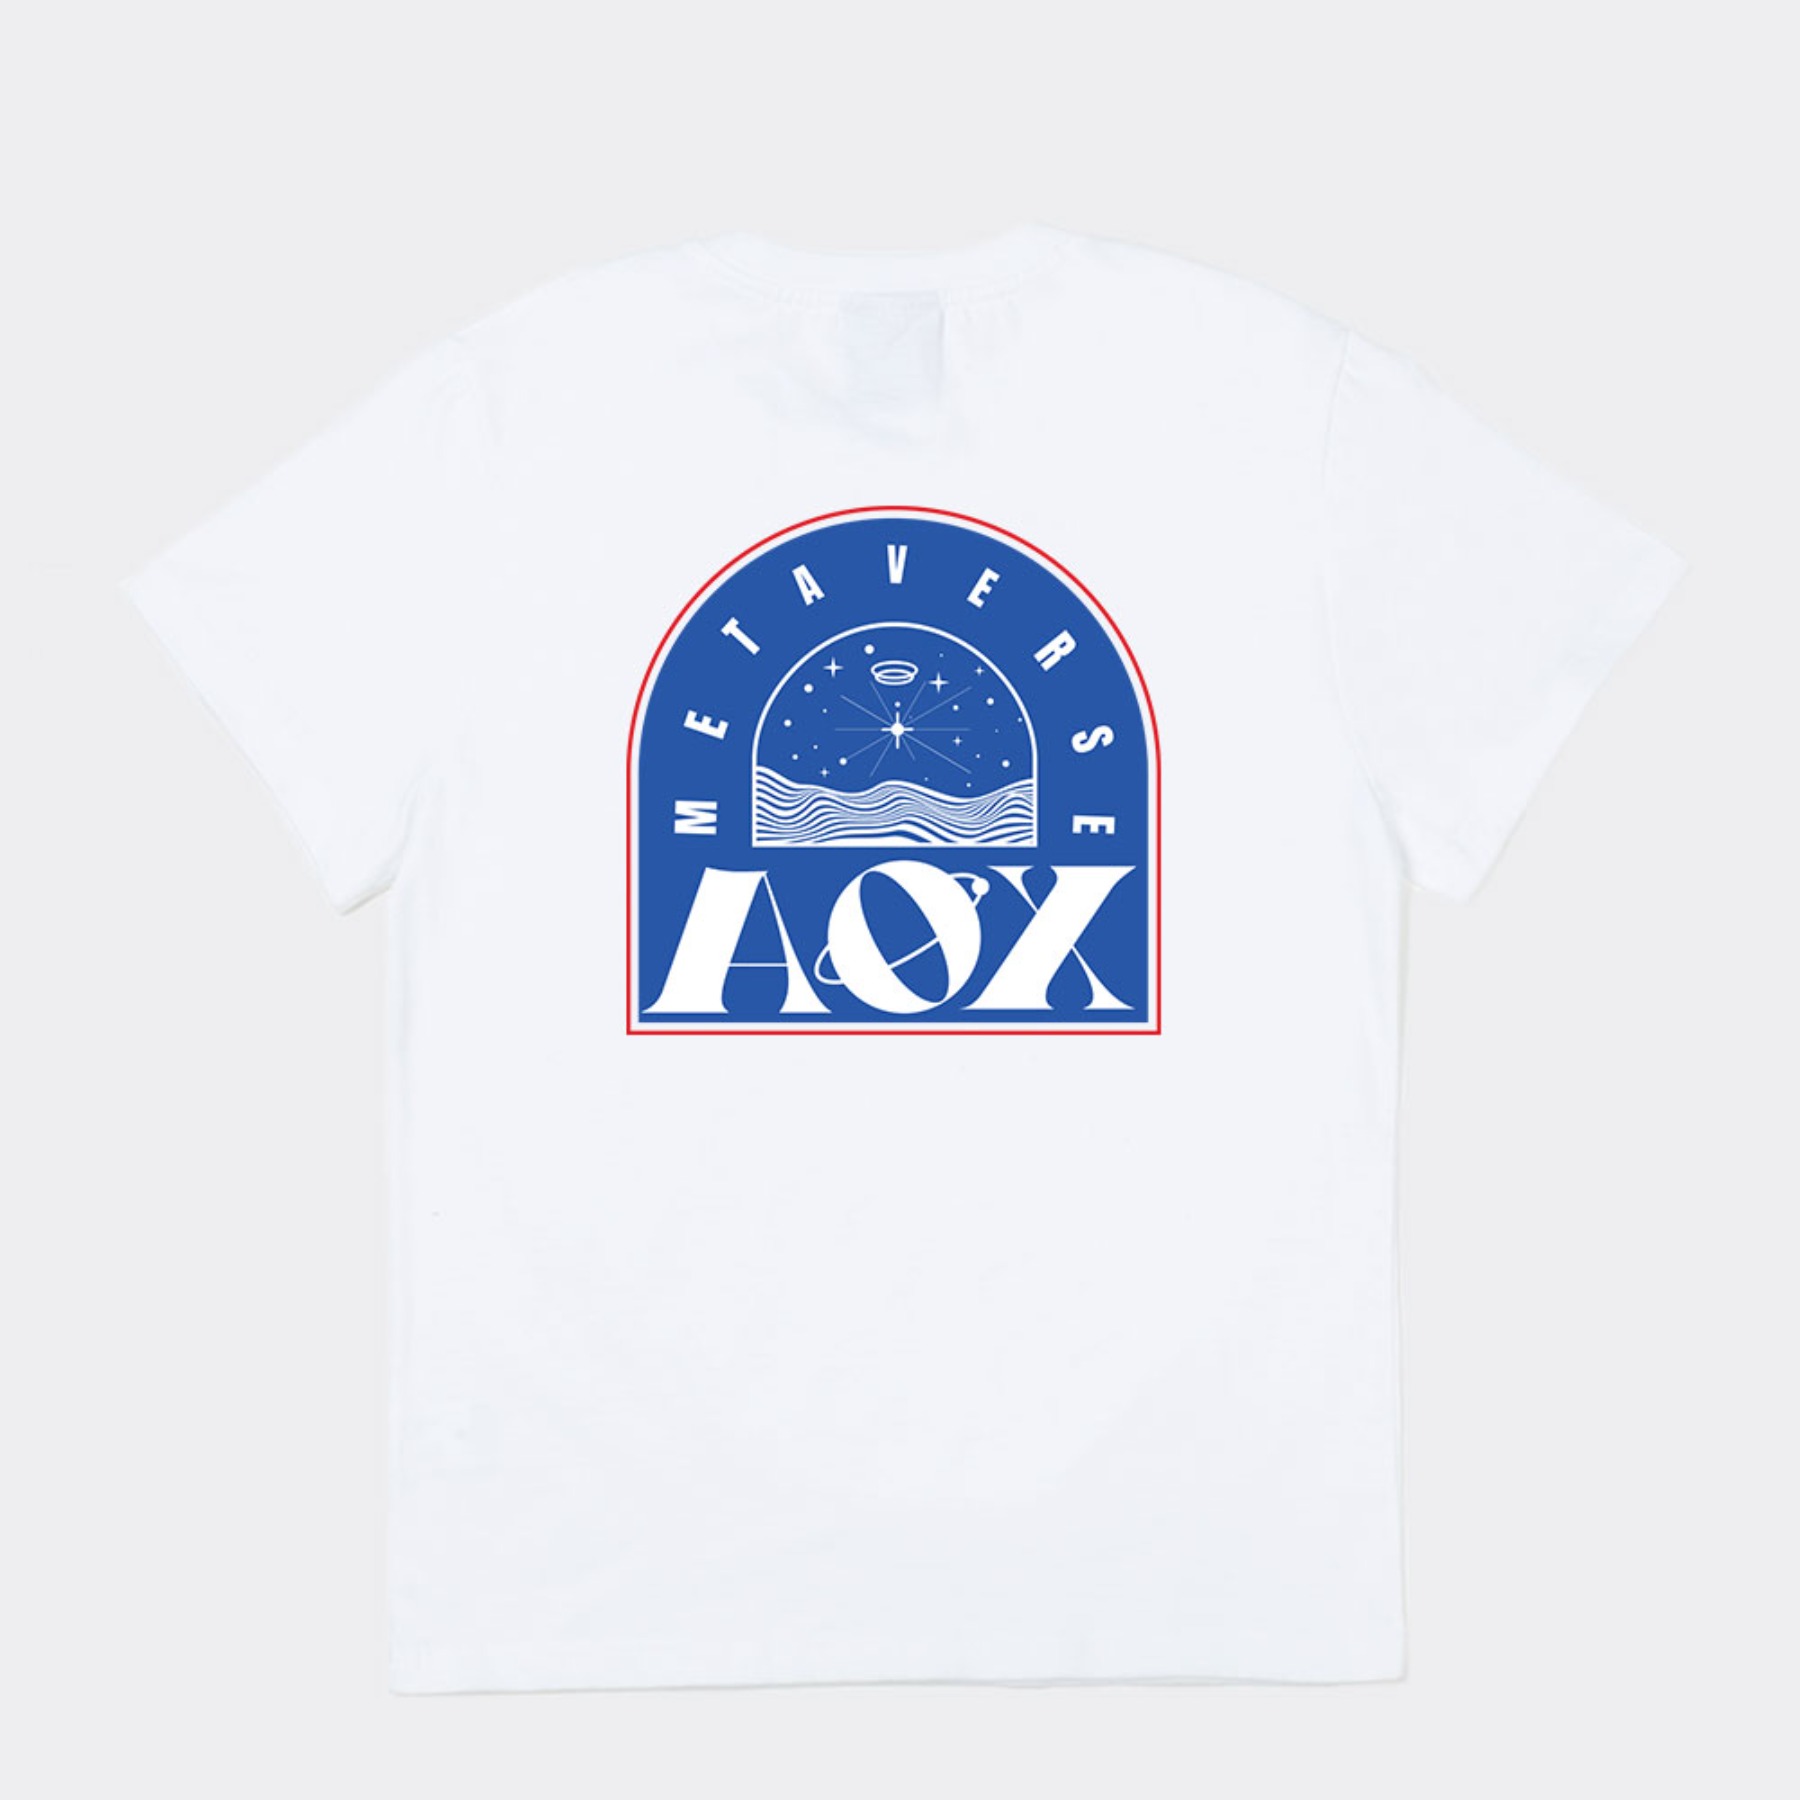 Arch Metaverse Short Sleeve T-shirts (White)